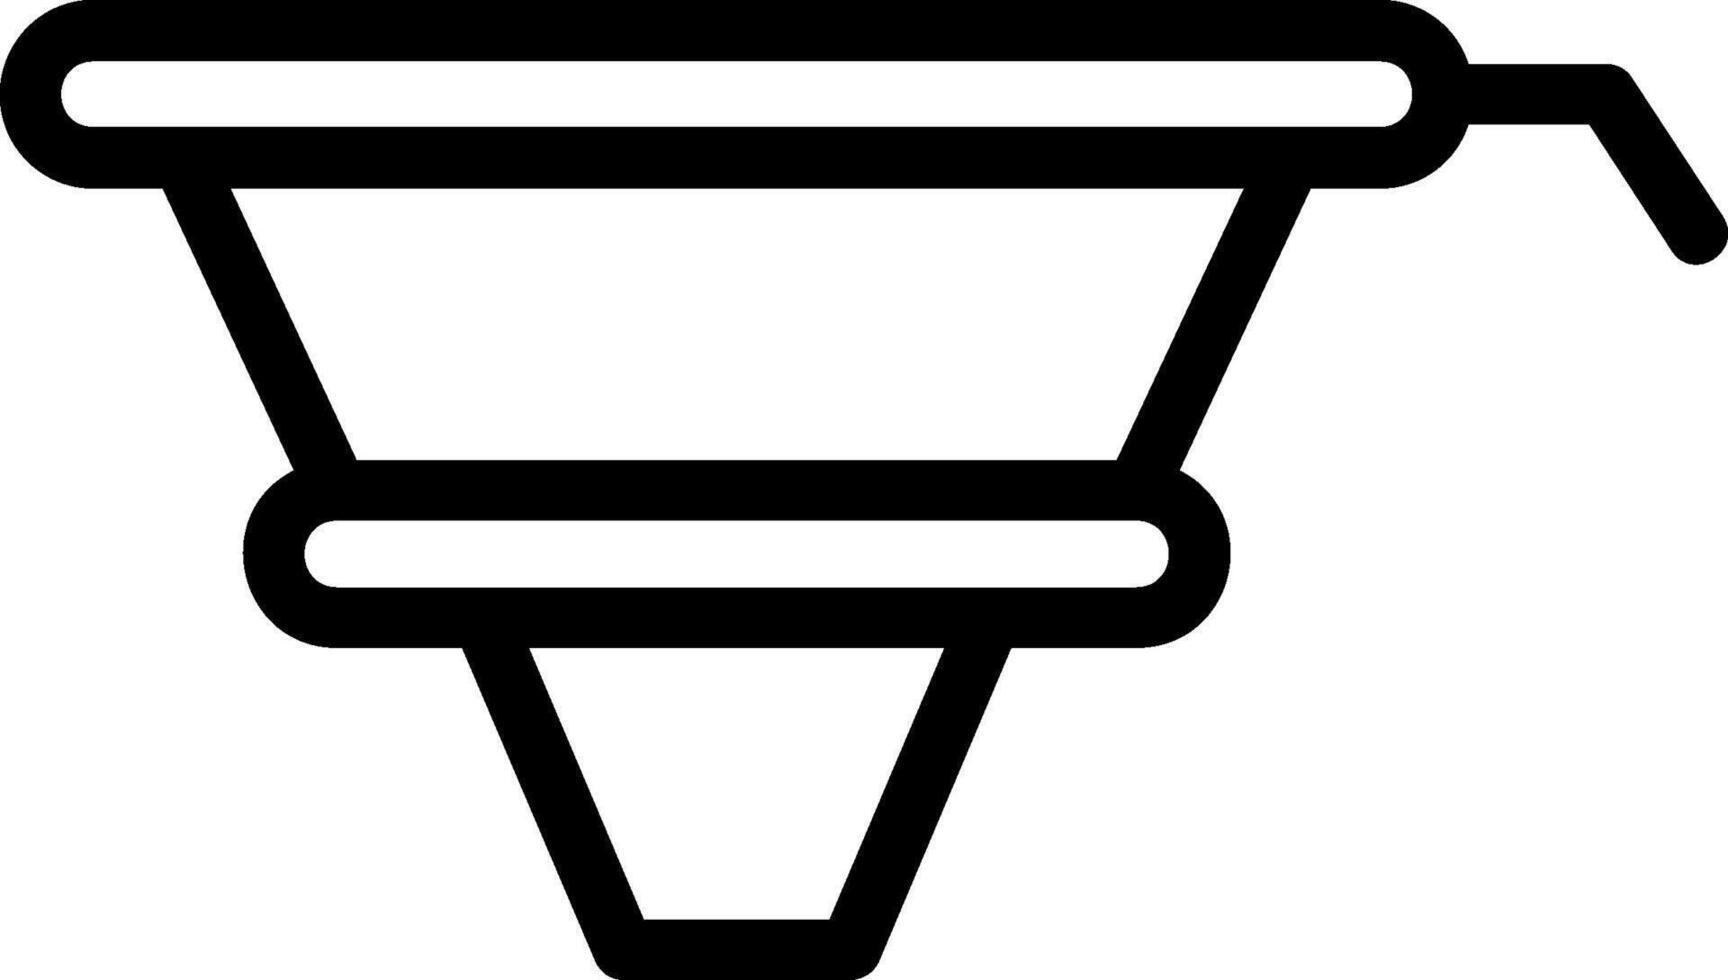 Funnel Line Icon vector